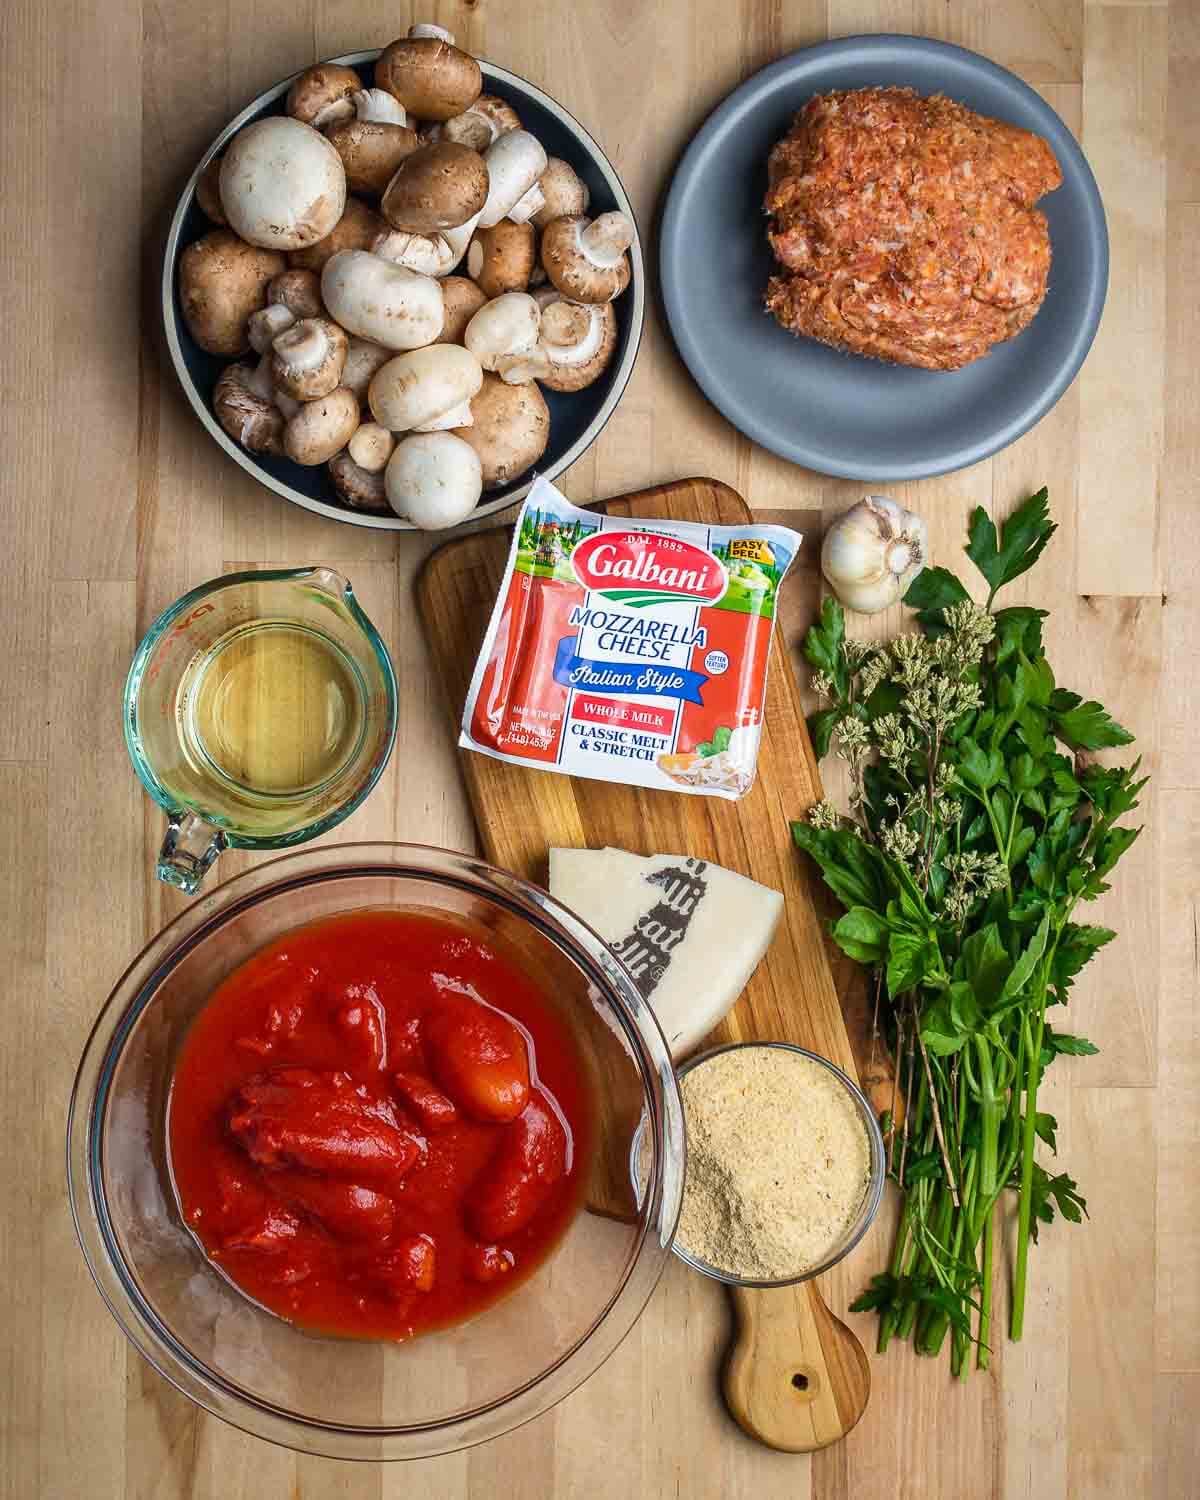 Ingredients shown: mushrooms, sausage, white wine, mozzarella, Pecorino, plum tomatoes, breadcrumbs, garlic and fresh herbs.